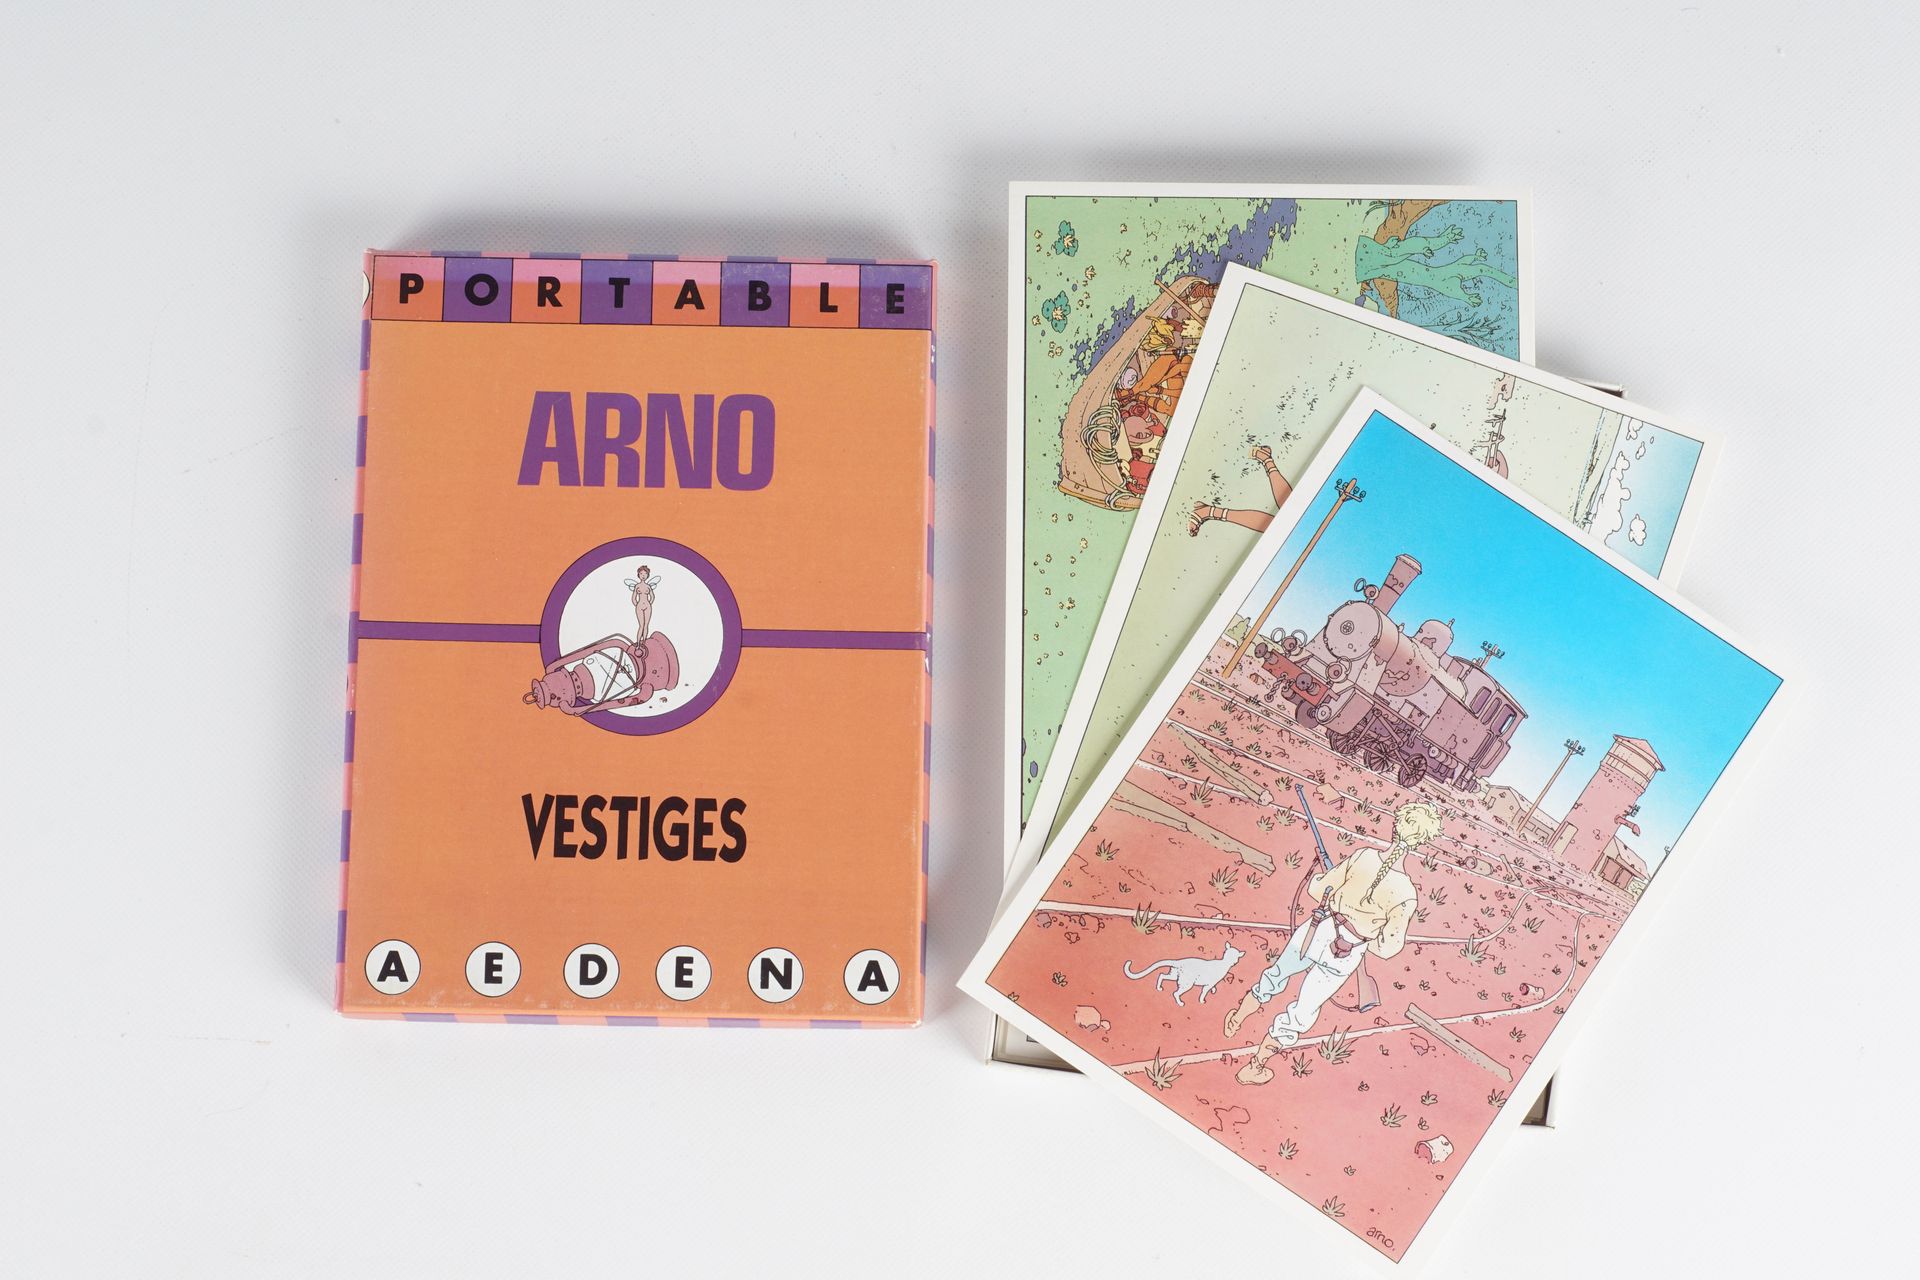 ARNO, Arnaud Dombre dit (1961-1996) 包含10幅插图的 "遗迹 "作品集，有编号和签名